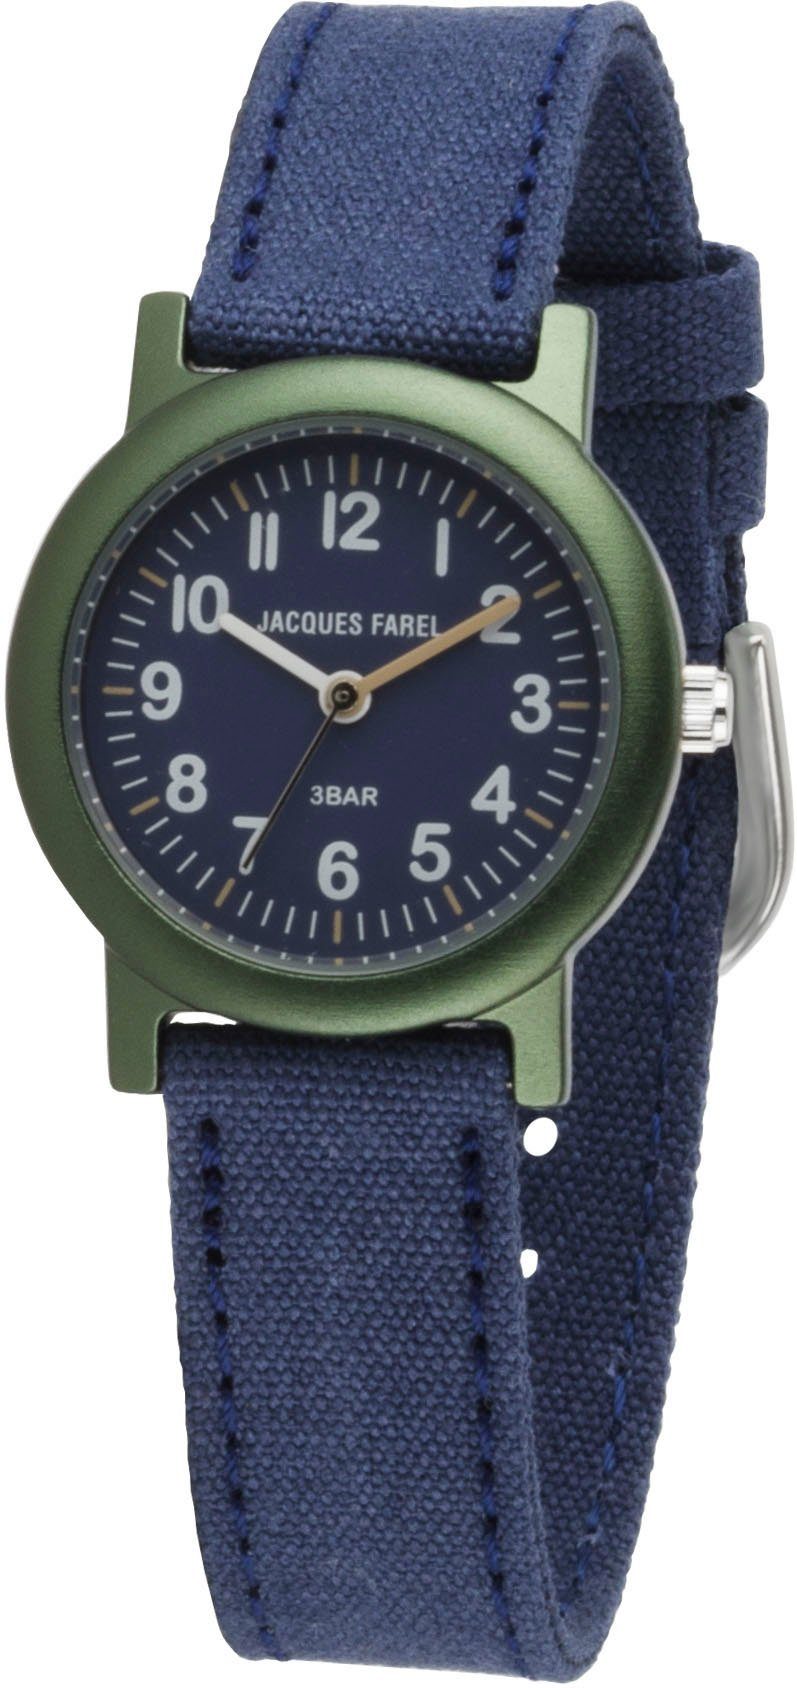 Jacques Farel Quarzuhr ORG 0304, Armbanduhr, Kinderuhr, ideal auch als Geschenk